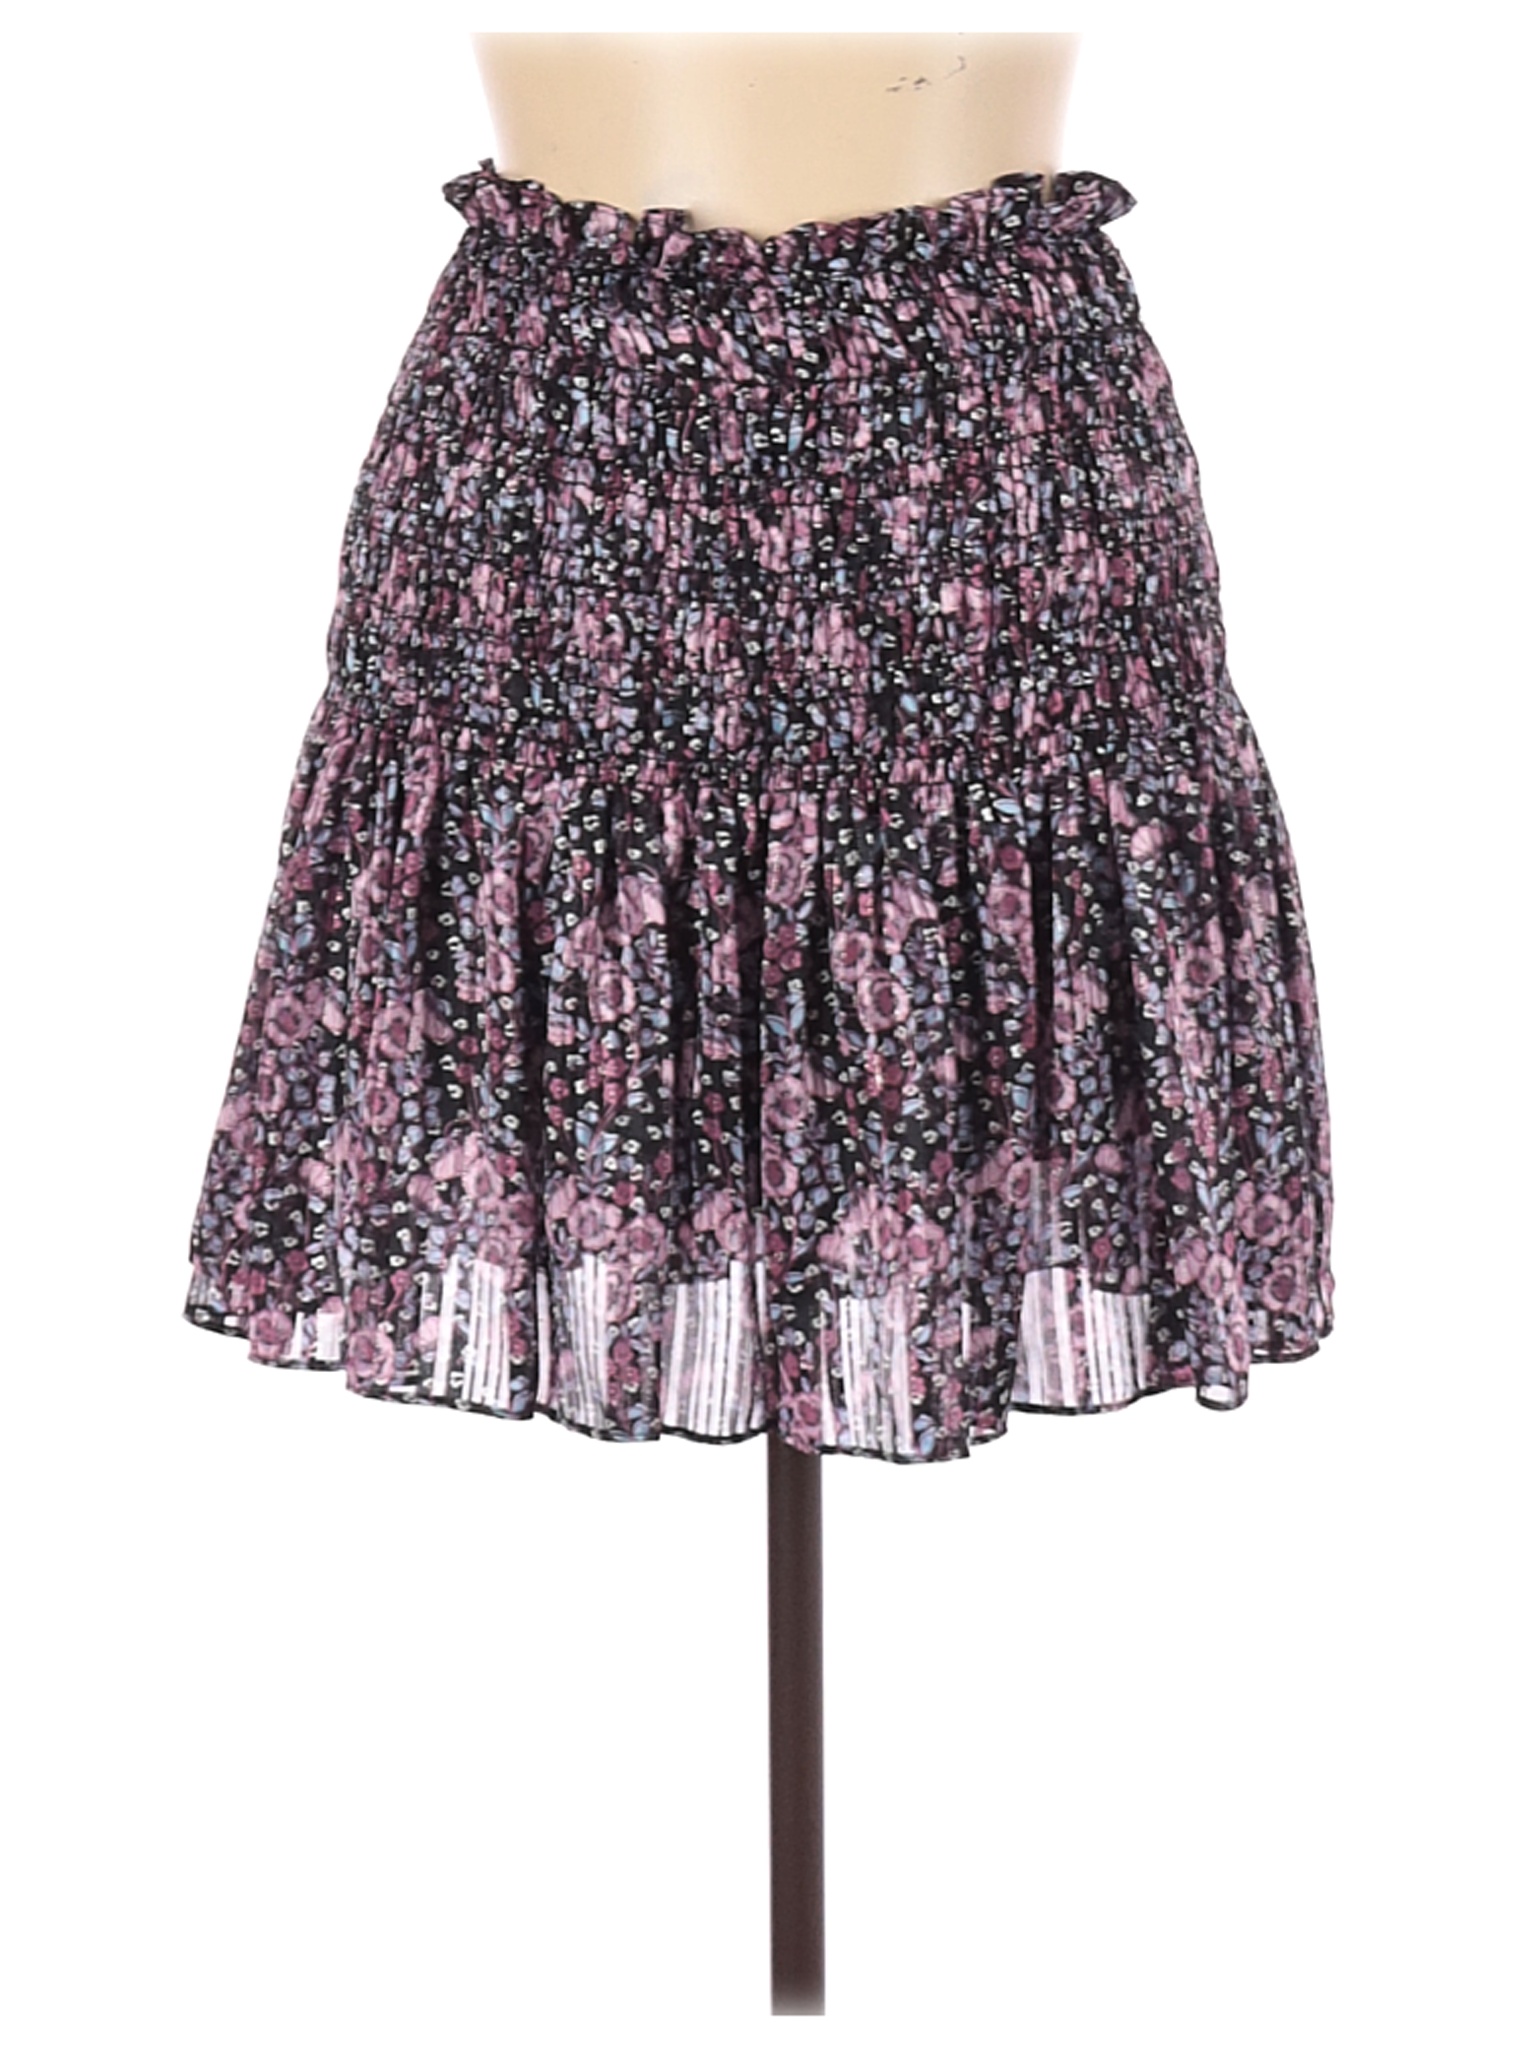 Zara Women Purple Casual Skirt M | eBay